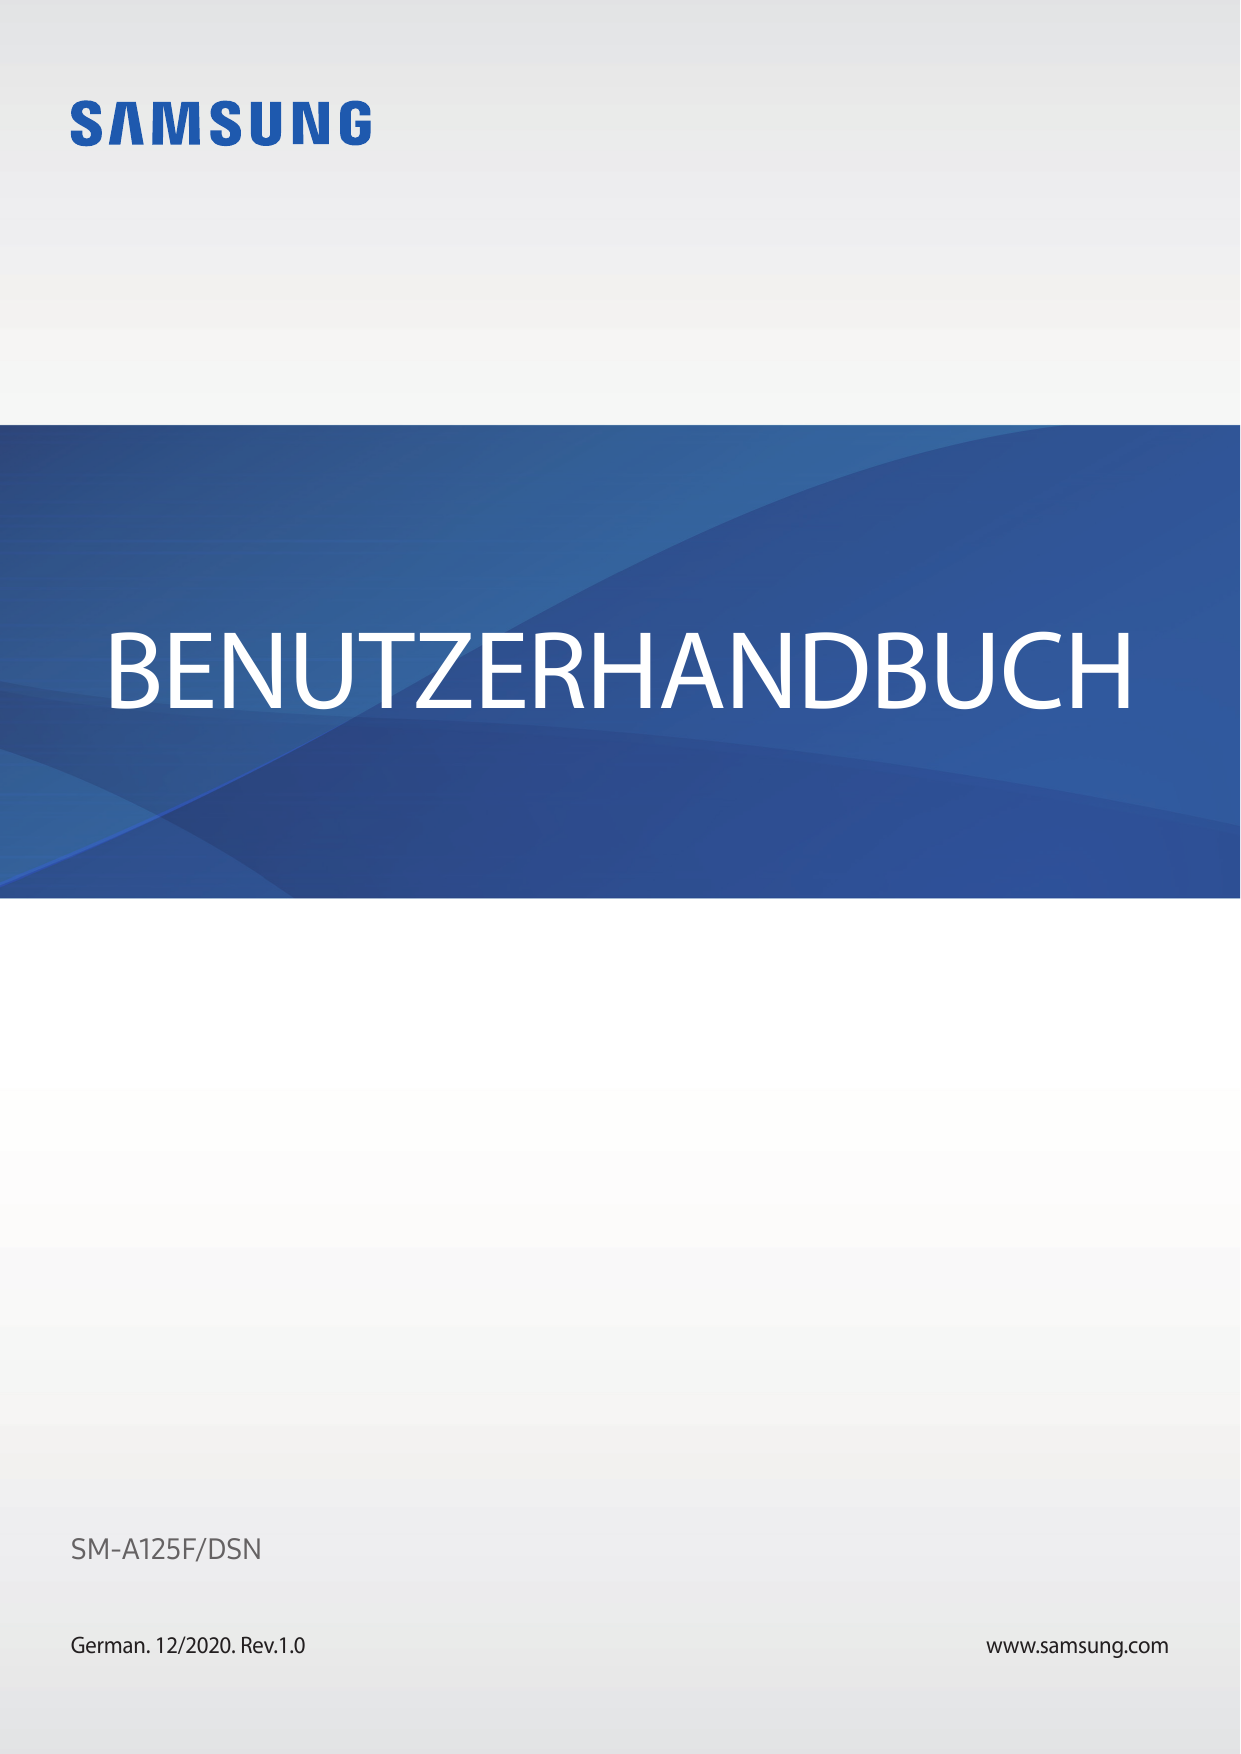 BENUTZERHANDBUCHSM-A125F/DSNGerman. 12/2020. Rev.1.0www.samsung.com